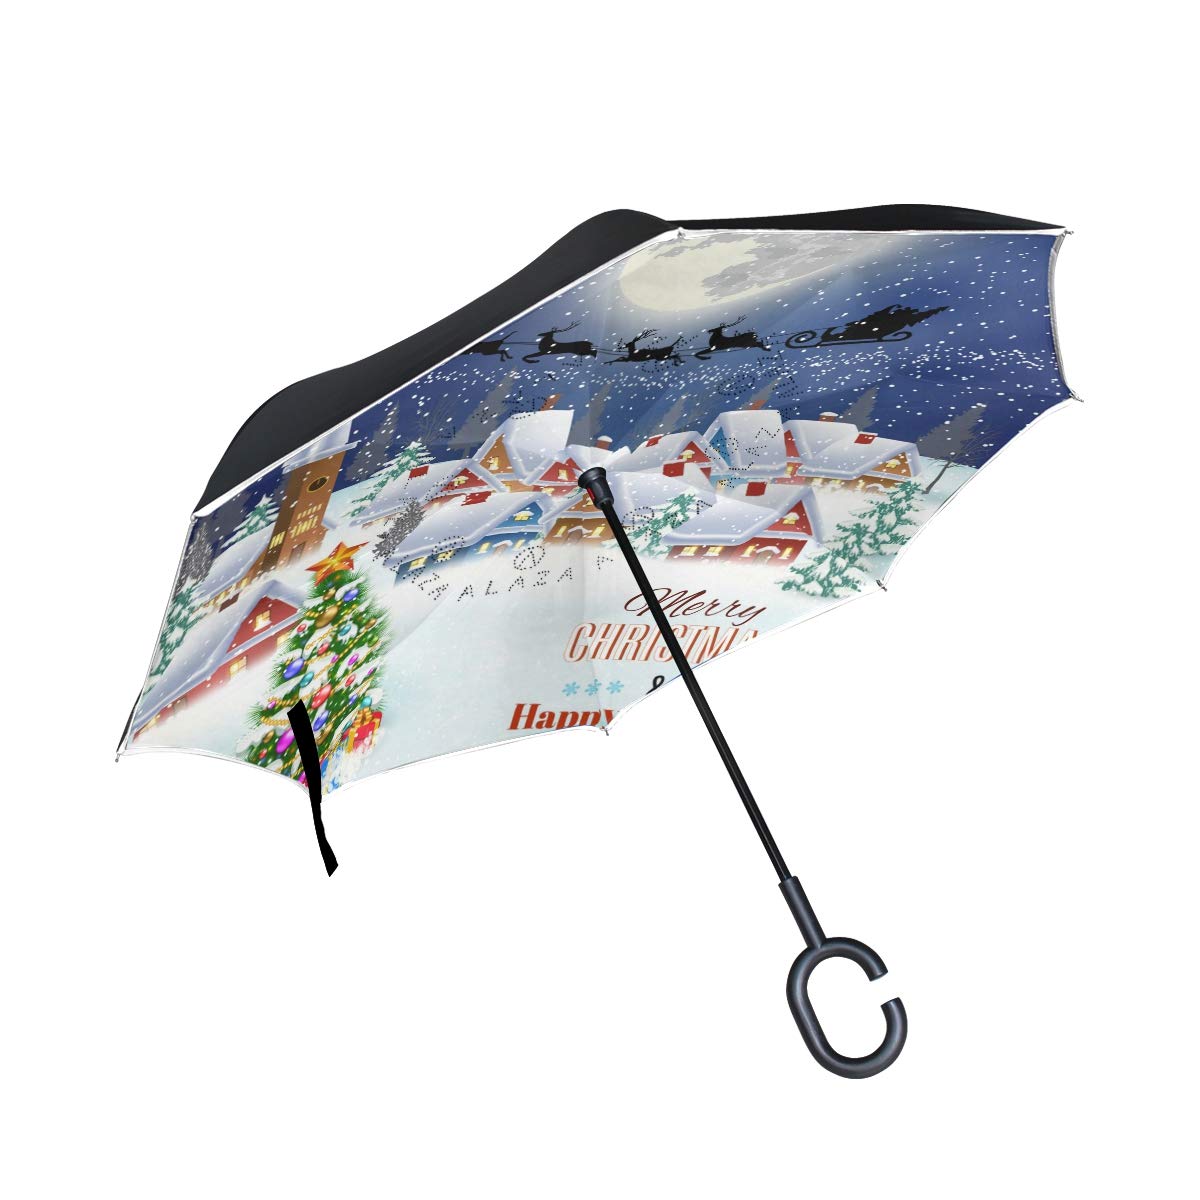 ISAOA Doppelschichtiger Regenschirm, selbststehend, freistehend, freistehend, Frohe Weihnachten, Neujahr, Winddicht, UV-Schutz, gro?er gerader Regenschirm